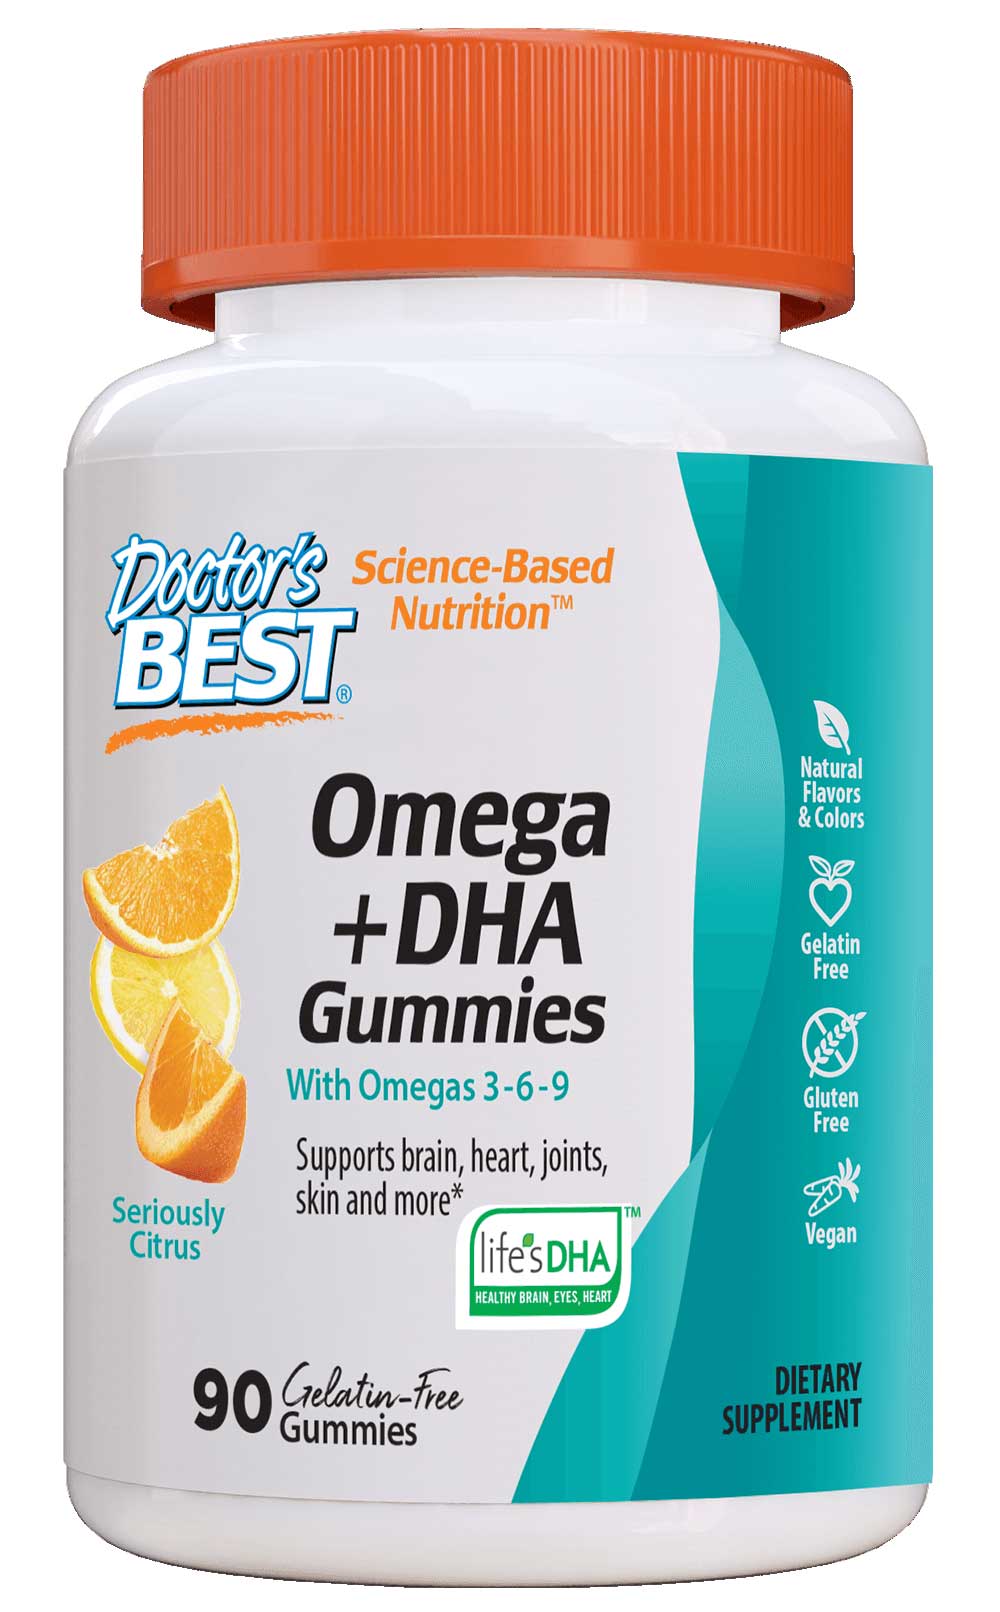 Doctor's Best Omega + DHA Gummies